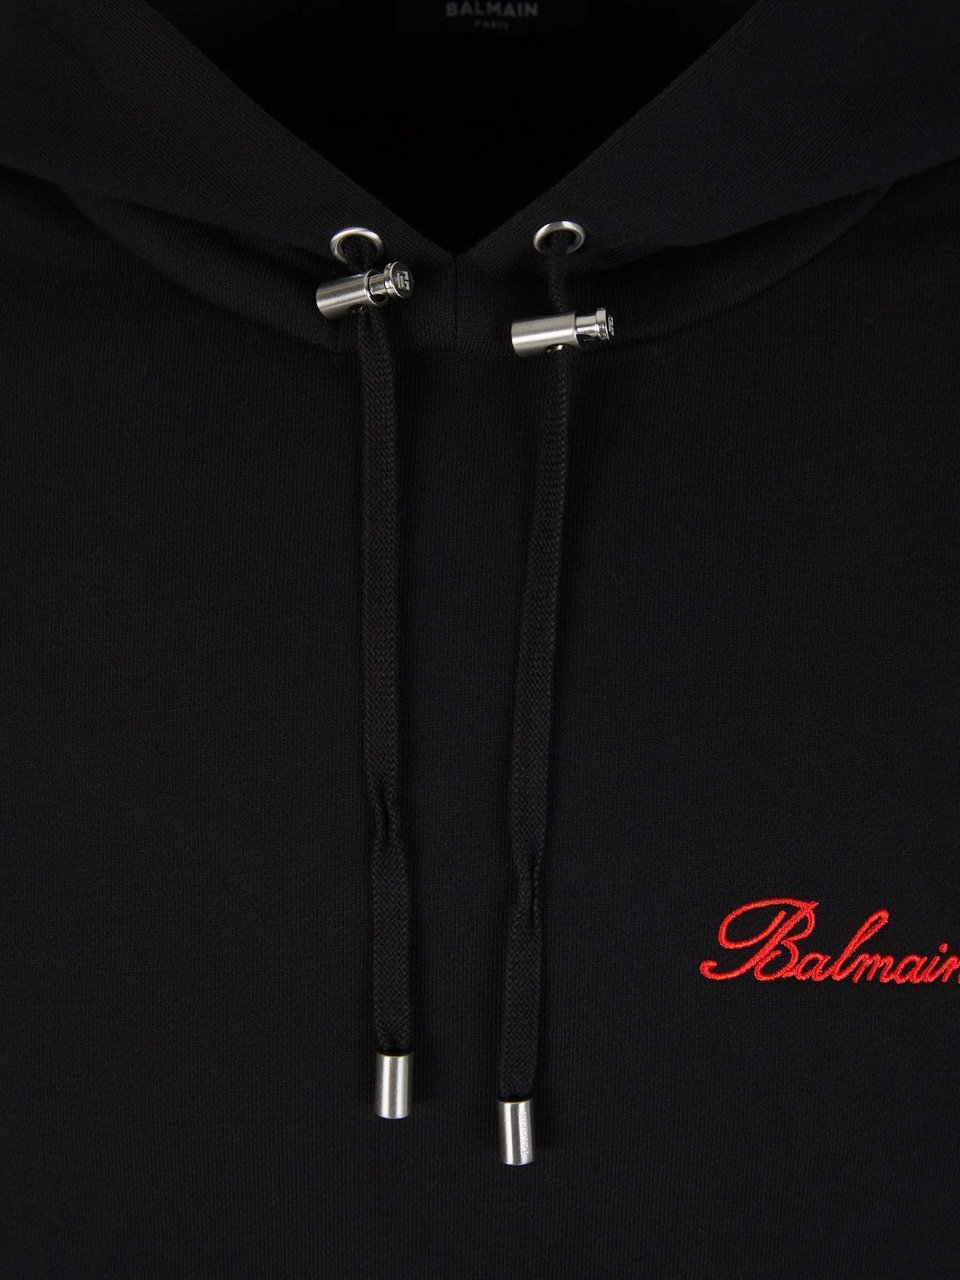 Balmain Logo Hood Sweatshirt Zwart